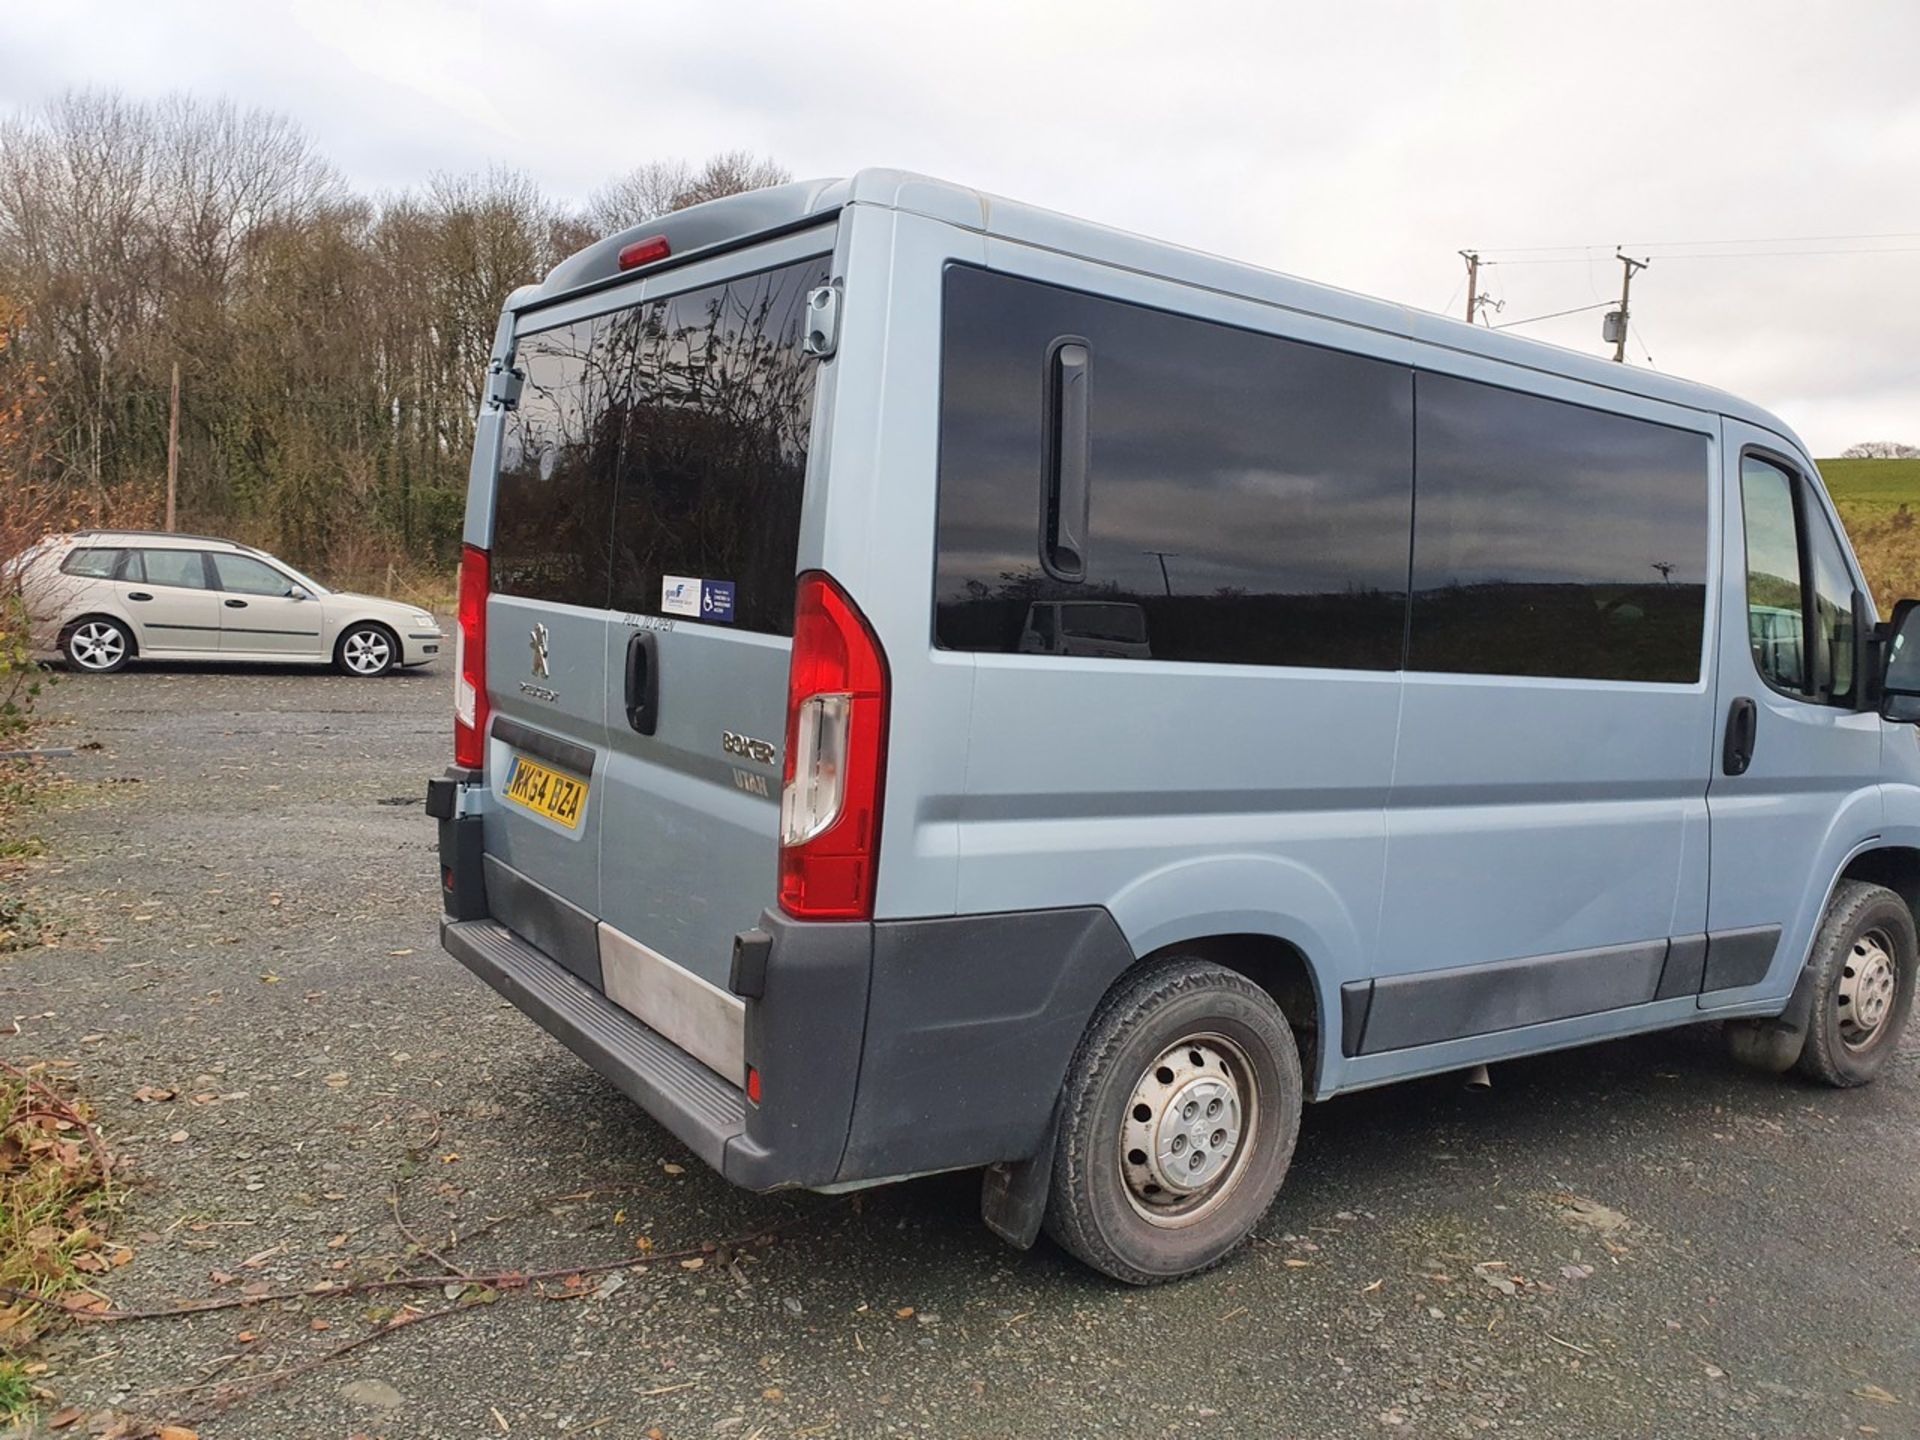 15/64 PEUGEOT BOXER 333 L1H1 HDI - 2198cc 5dr Minibus (Blue, 9k) - Image 18 of 36